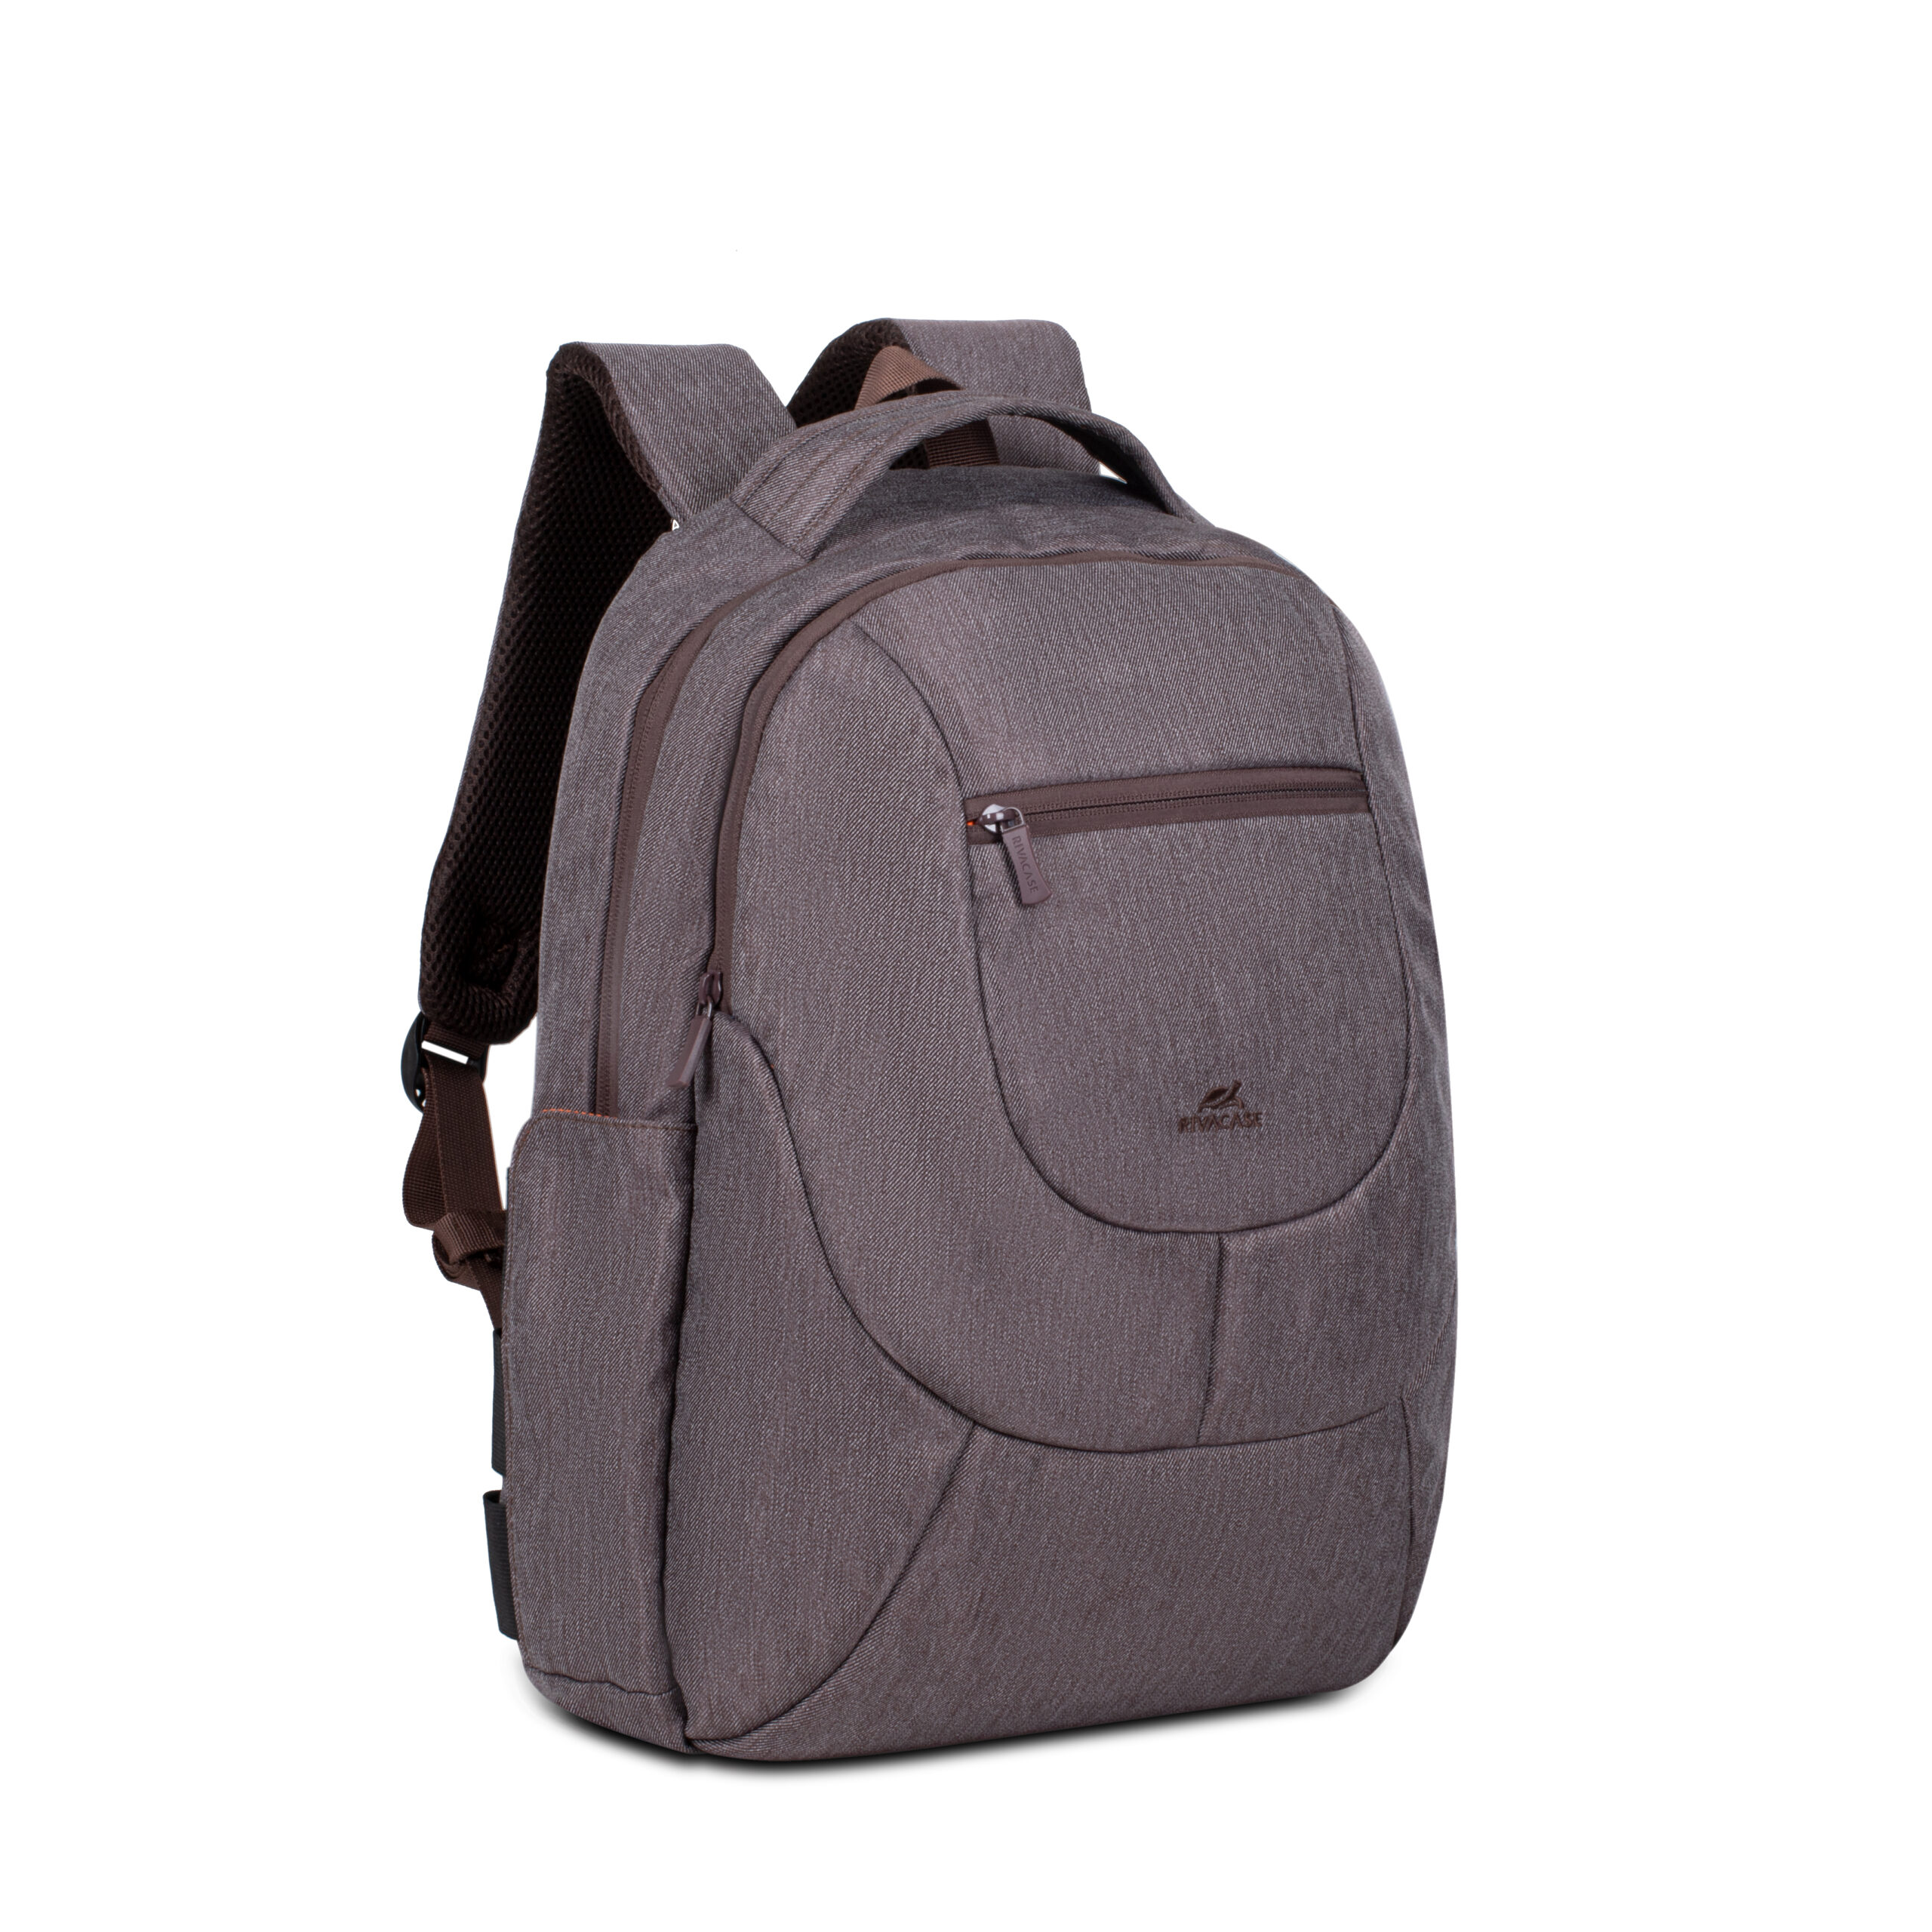 RIVACASE 7761 mocha Laptop backpack 15.6″ / 6